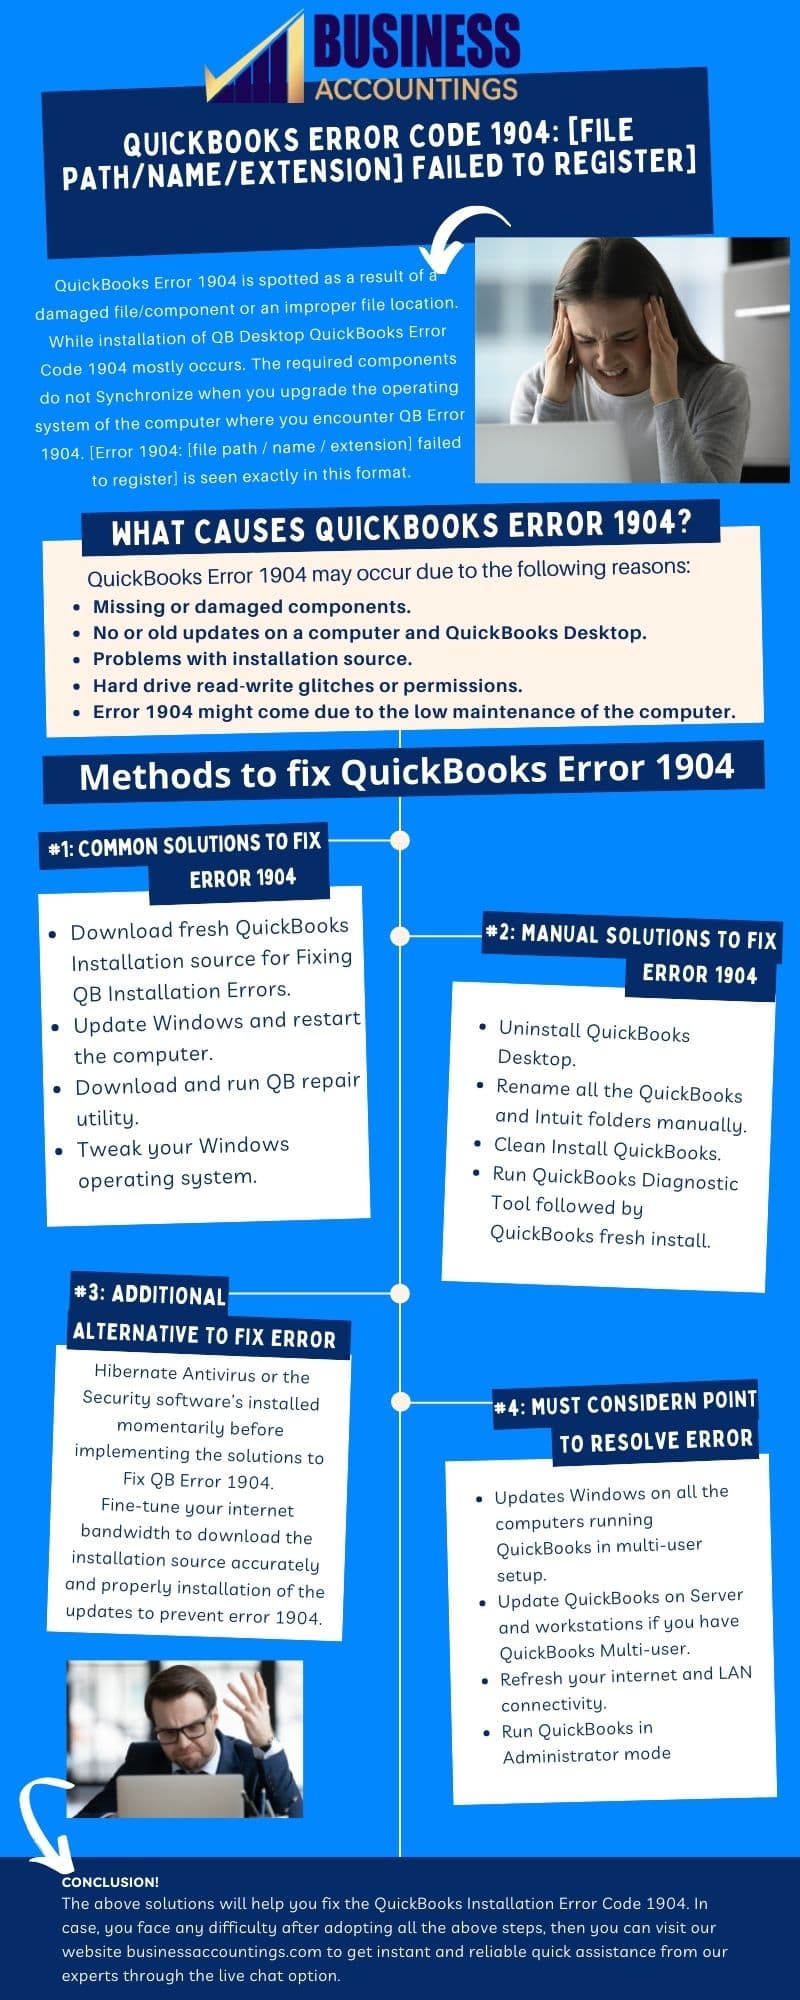 Infographic of Solutions for Quickbooks Error 1904